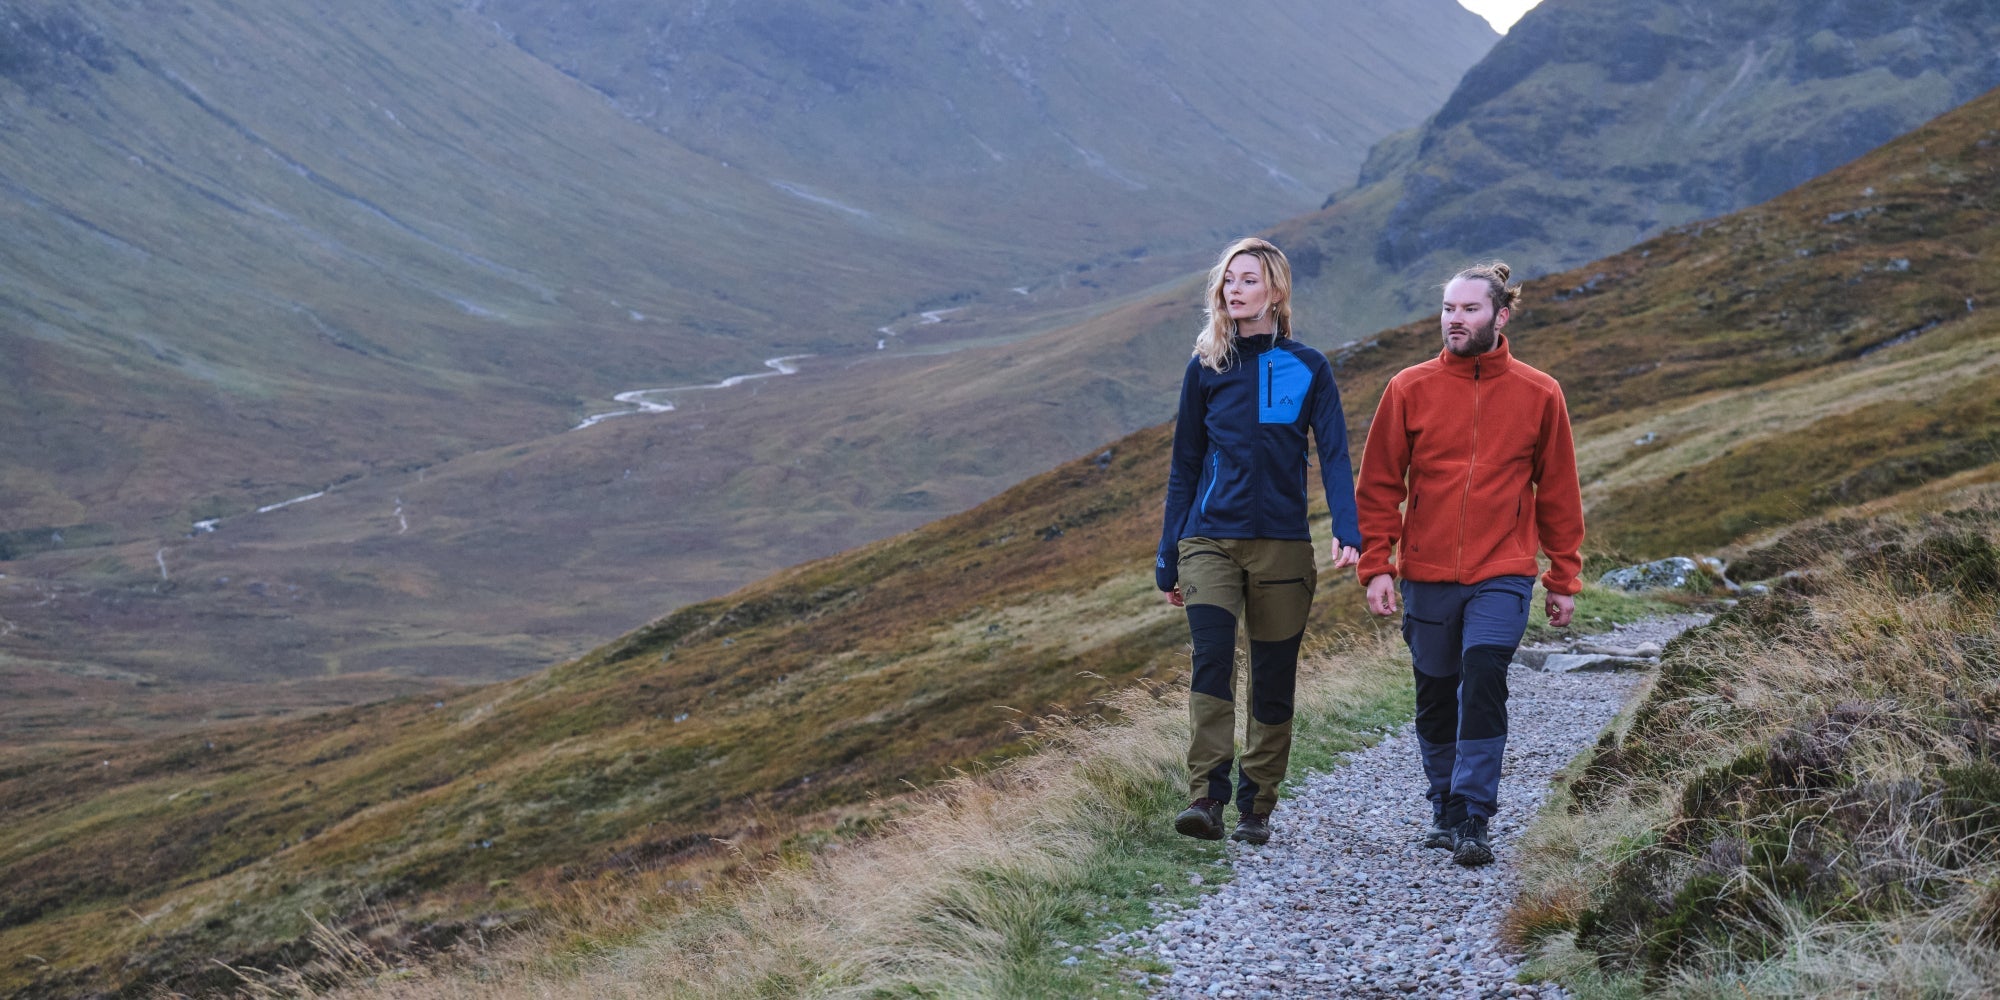 Fjern Bresprekk & Mysig Fleeces being worn on a Highland path